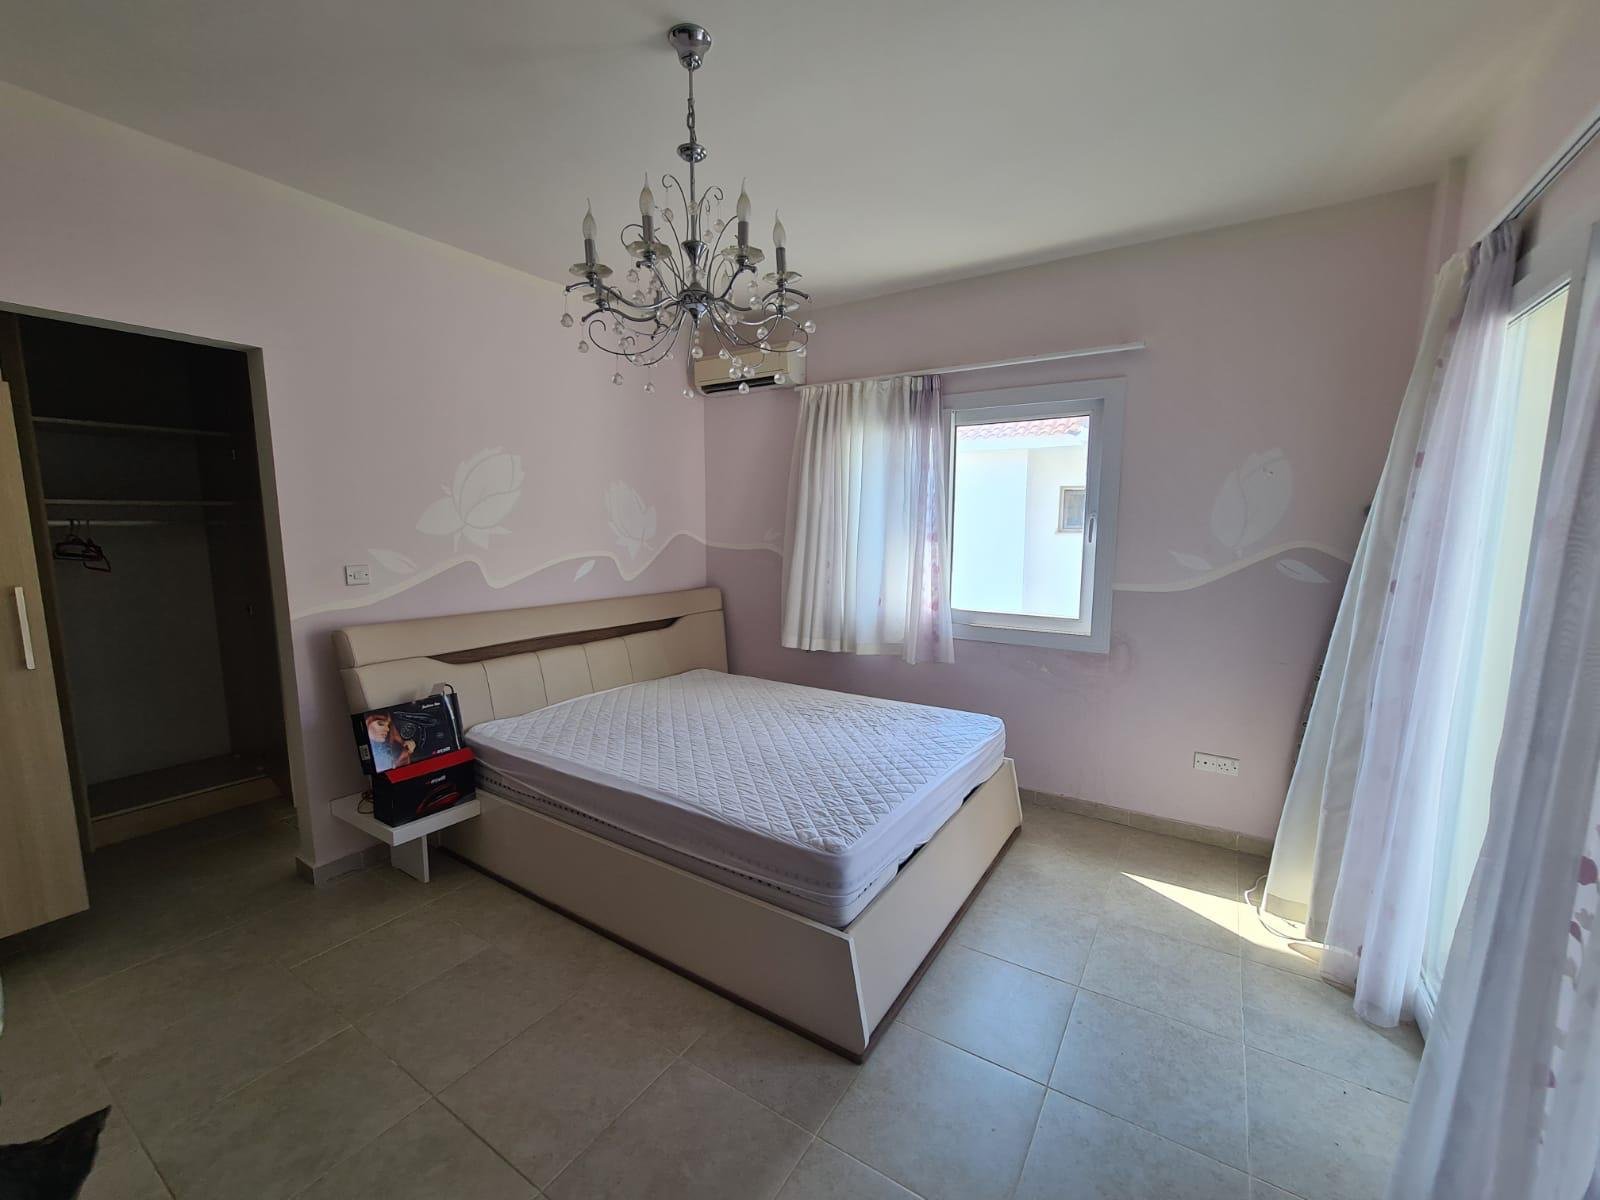 3 bedroom villa for sale in Kyrenia, Karshiyaka-0c4dd25e-6261-408c-b4fe-50881c5420b6